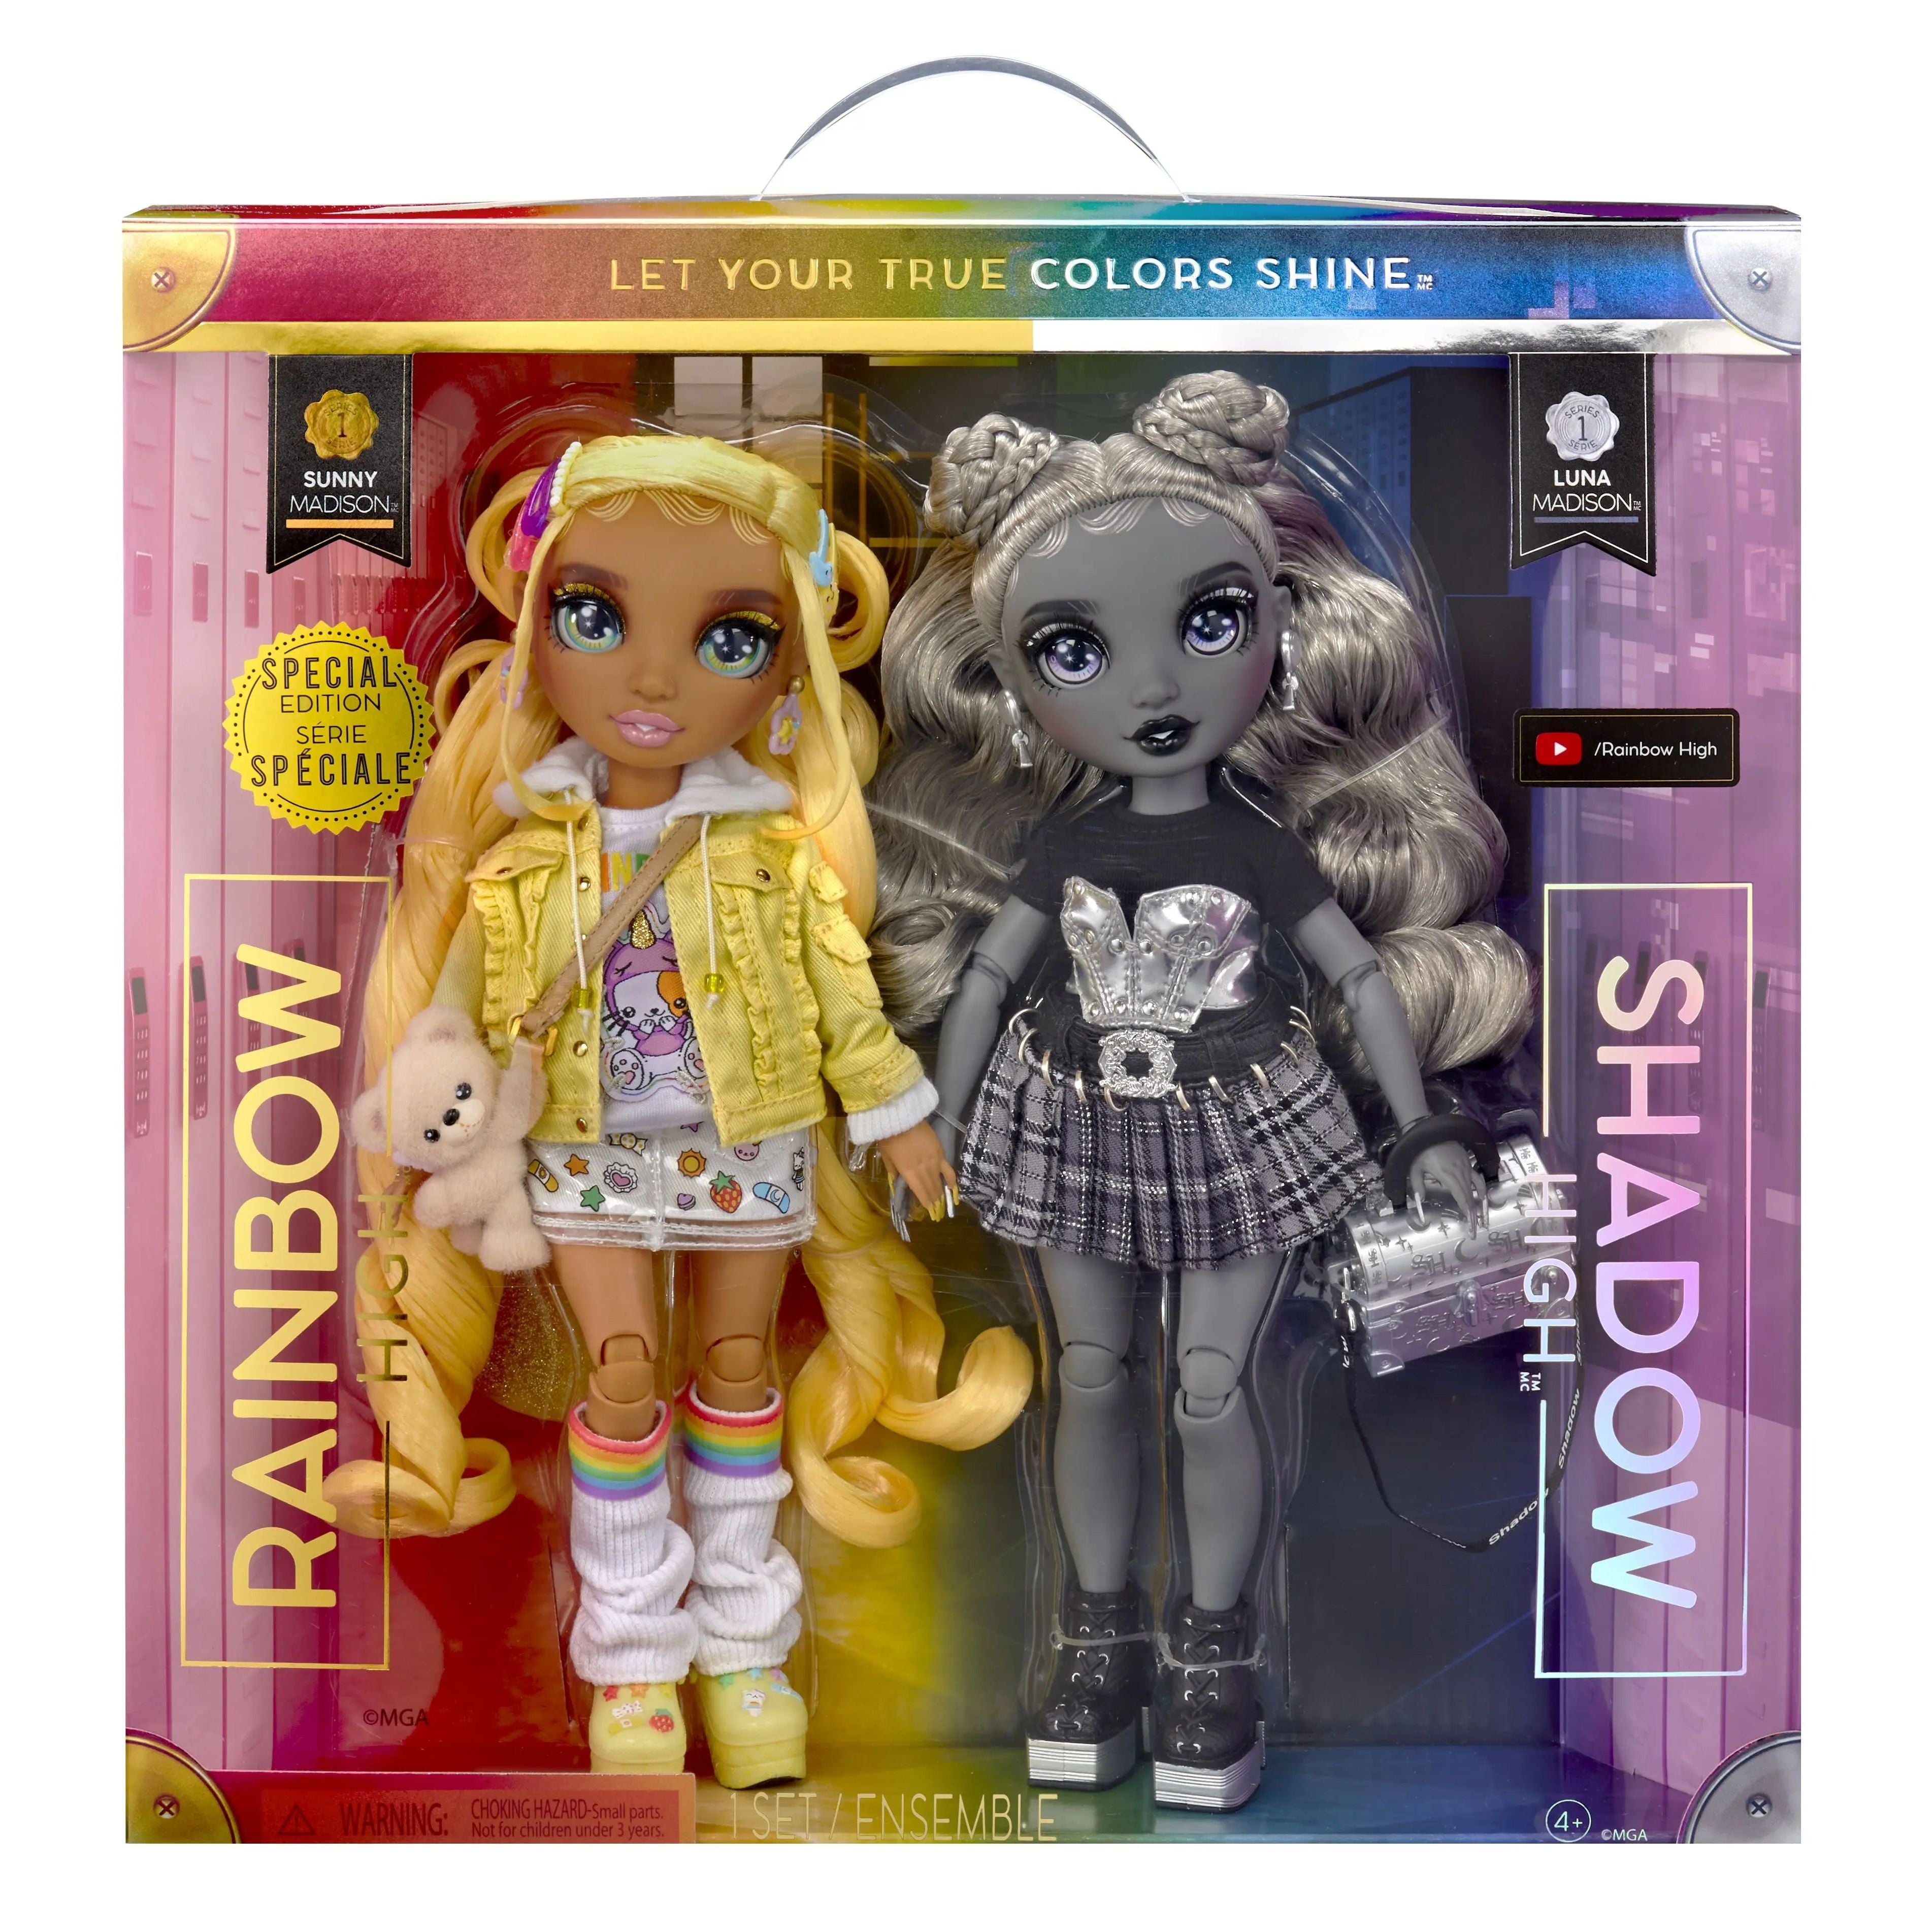 Rainbow High Shadow High Special Edition Madison Twins 2 Pack Dolls Sunny & Luna Rainbow High